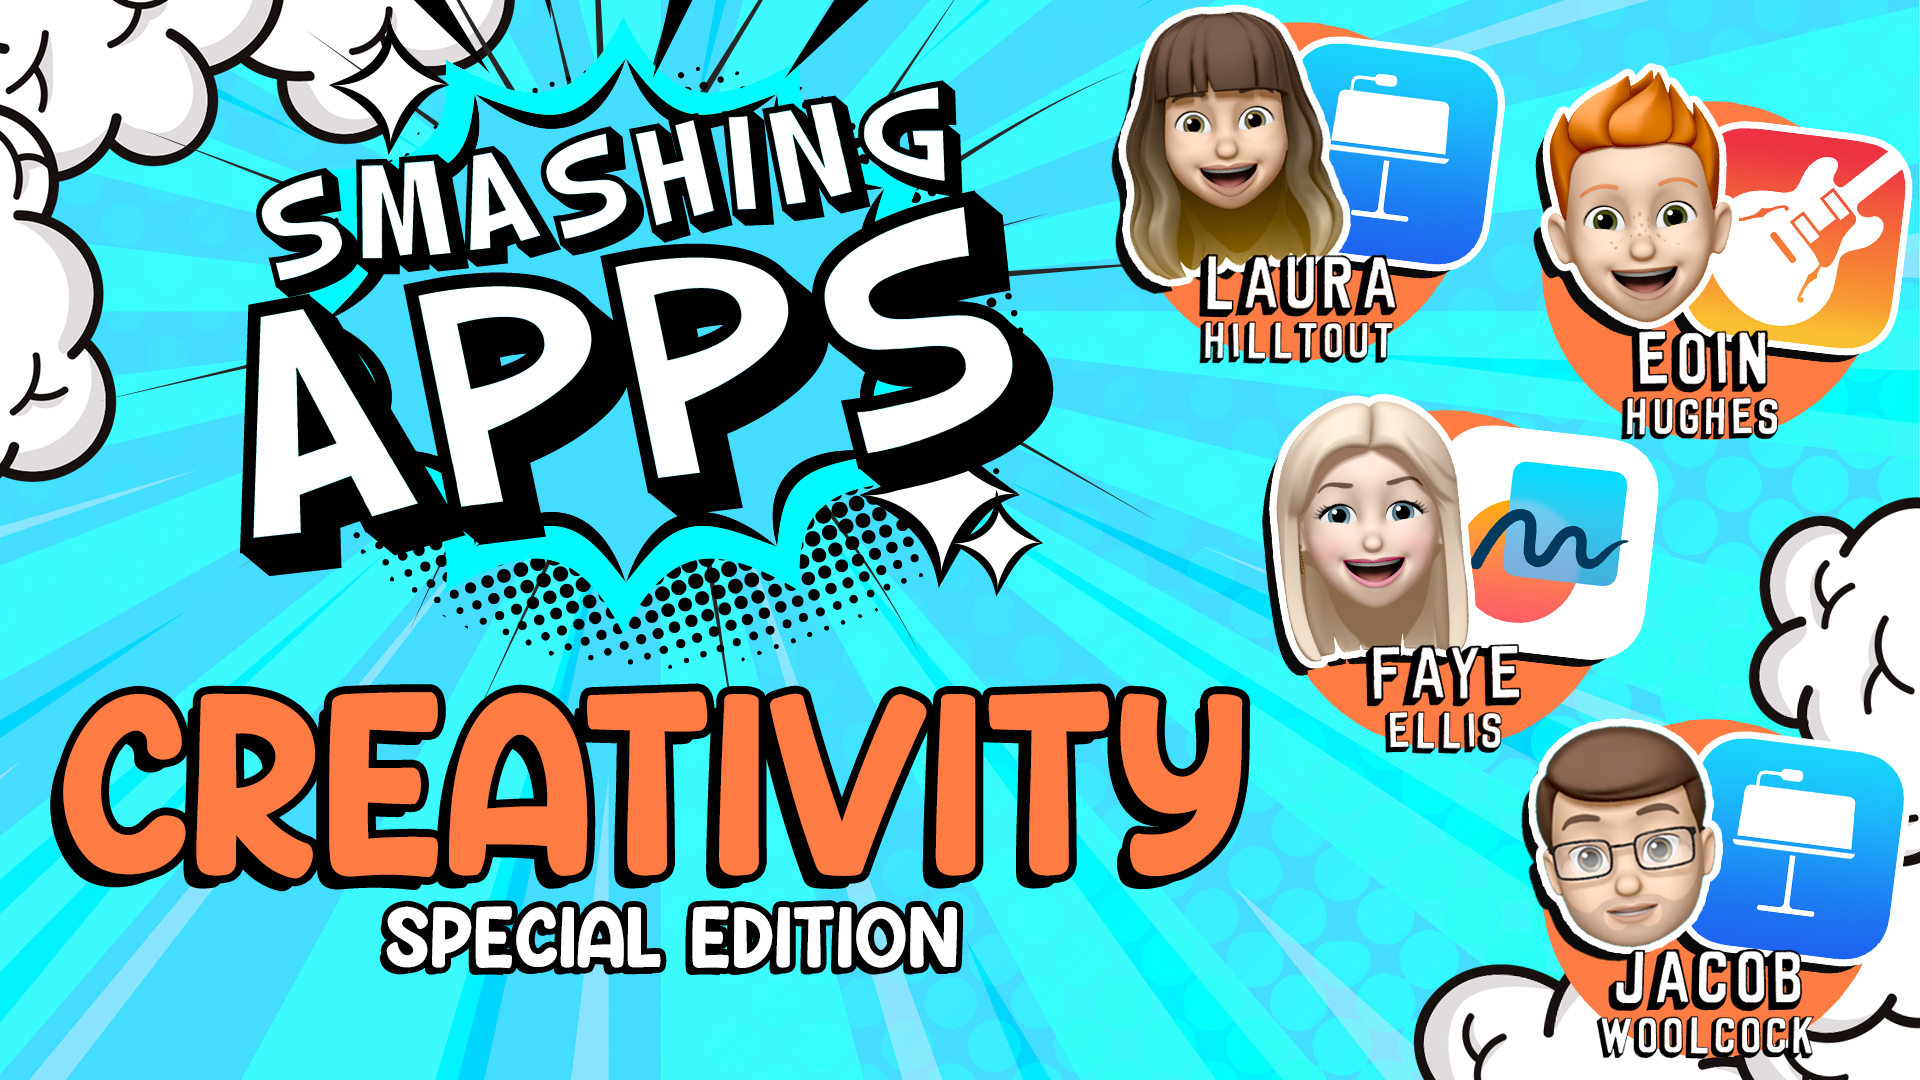 Smashing Apps artwork featuring Eoin Hughes, Faye Ellis, Laura Hilltout and Jacob Woolcock